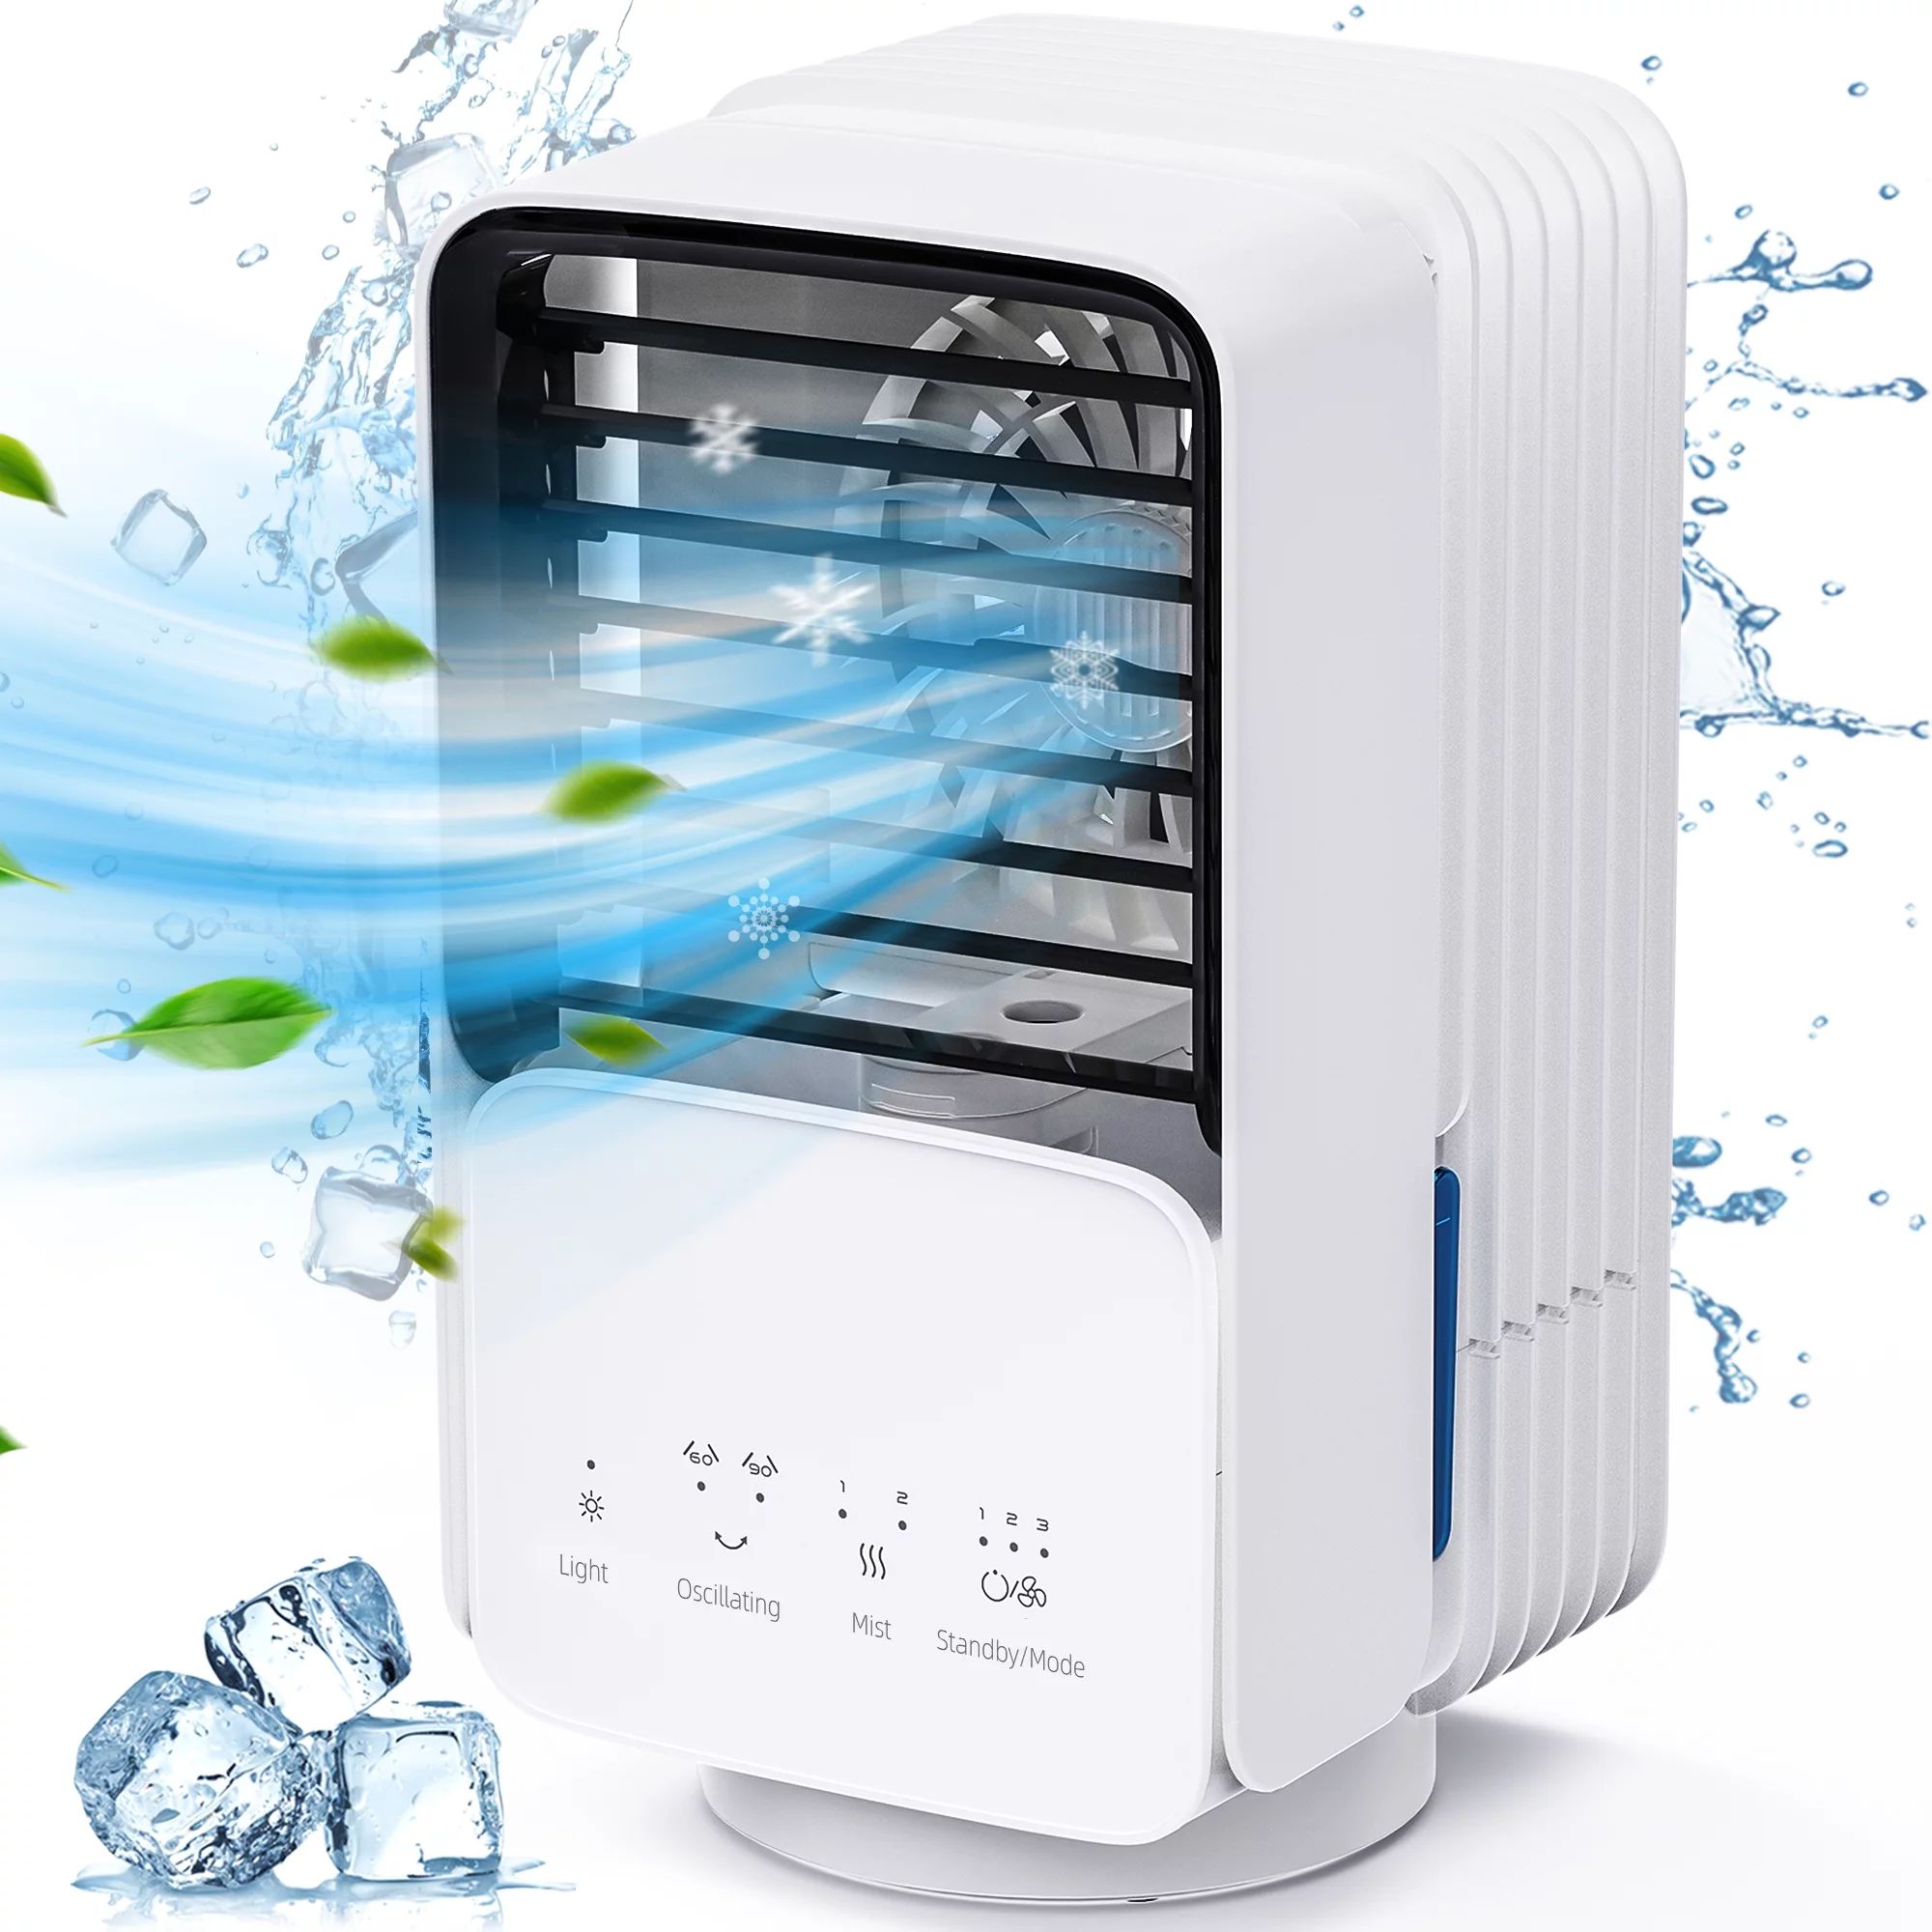 KLOUDIC Portable Air Conditioner Fan, Evaporative Air Cooler, USB Personal Desktop Cooling Fan wi... | Walmart (US)